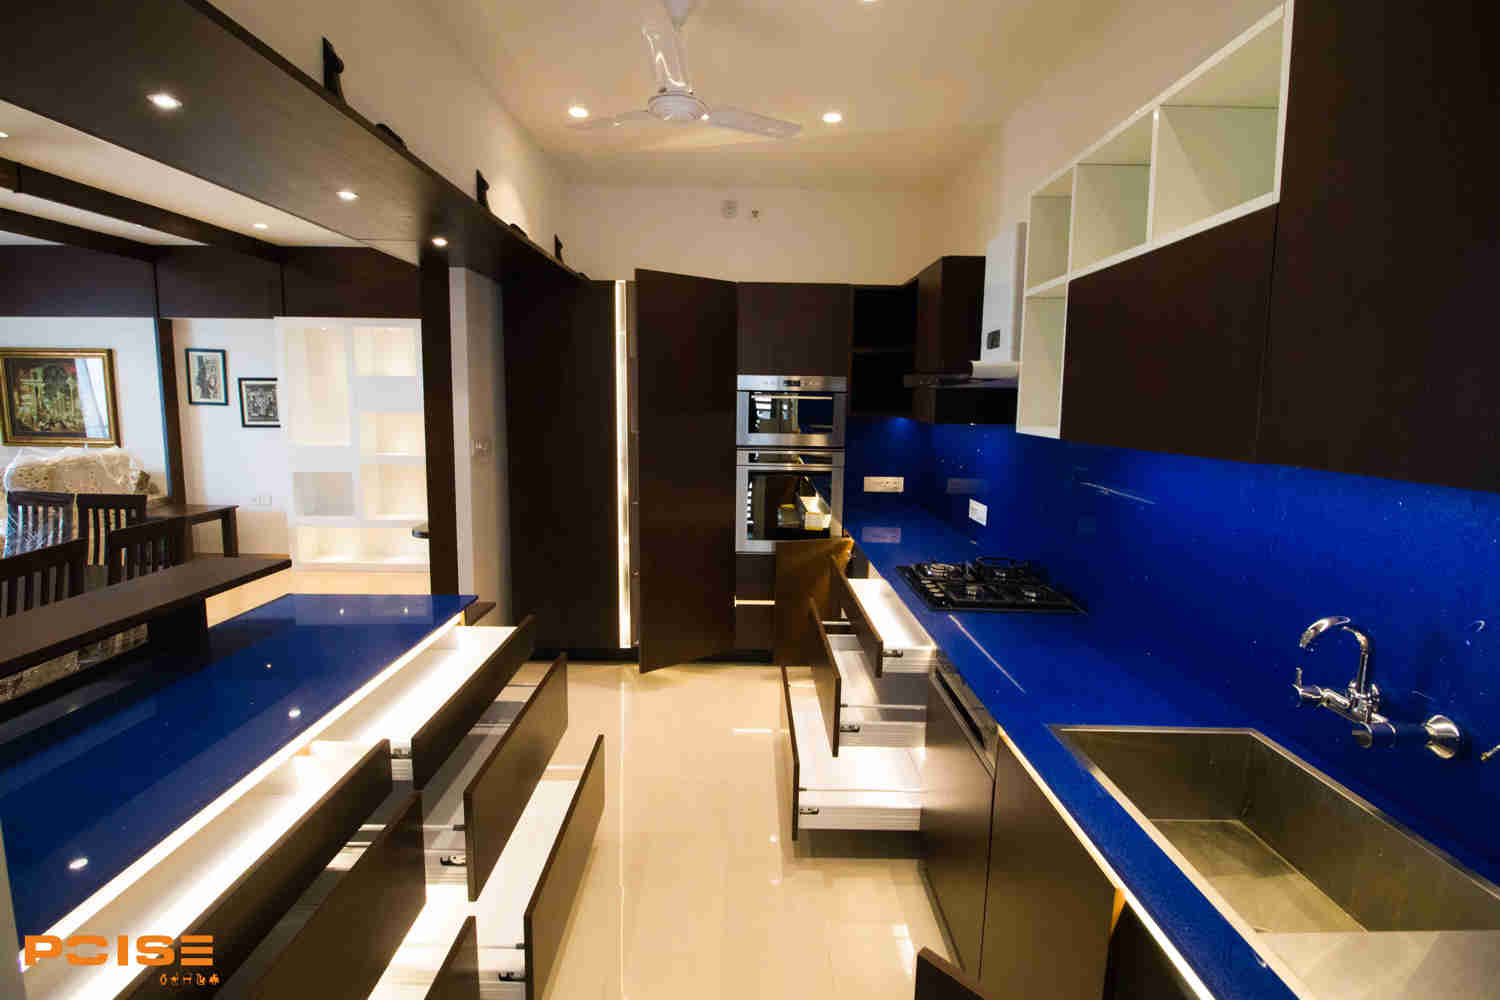 veneer modular kitchen 